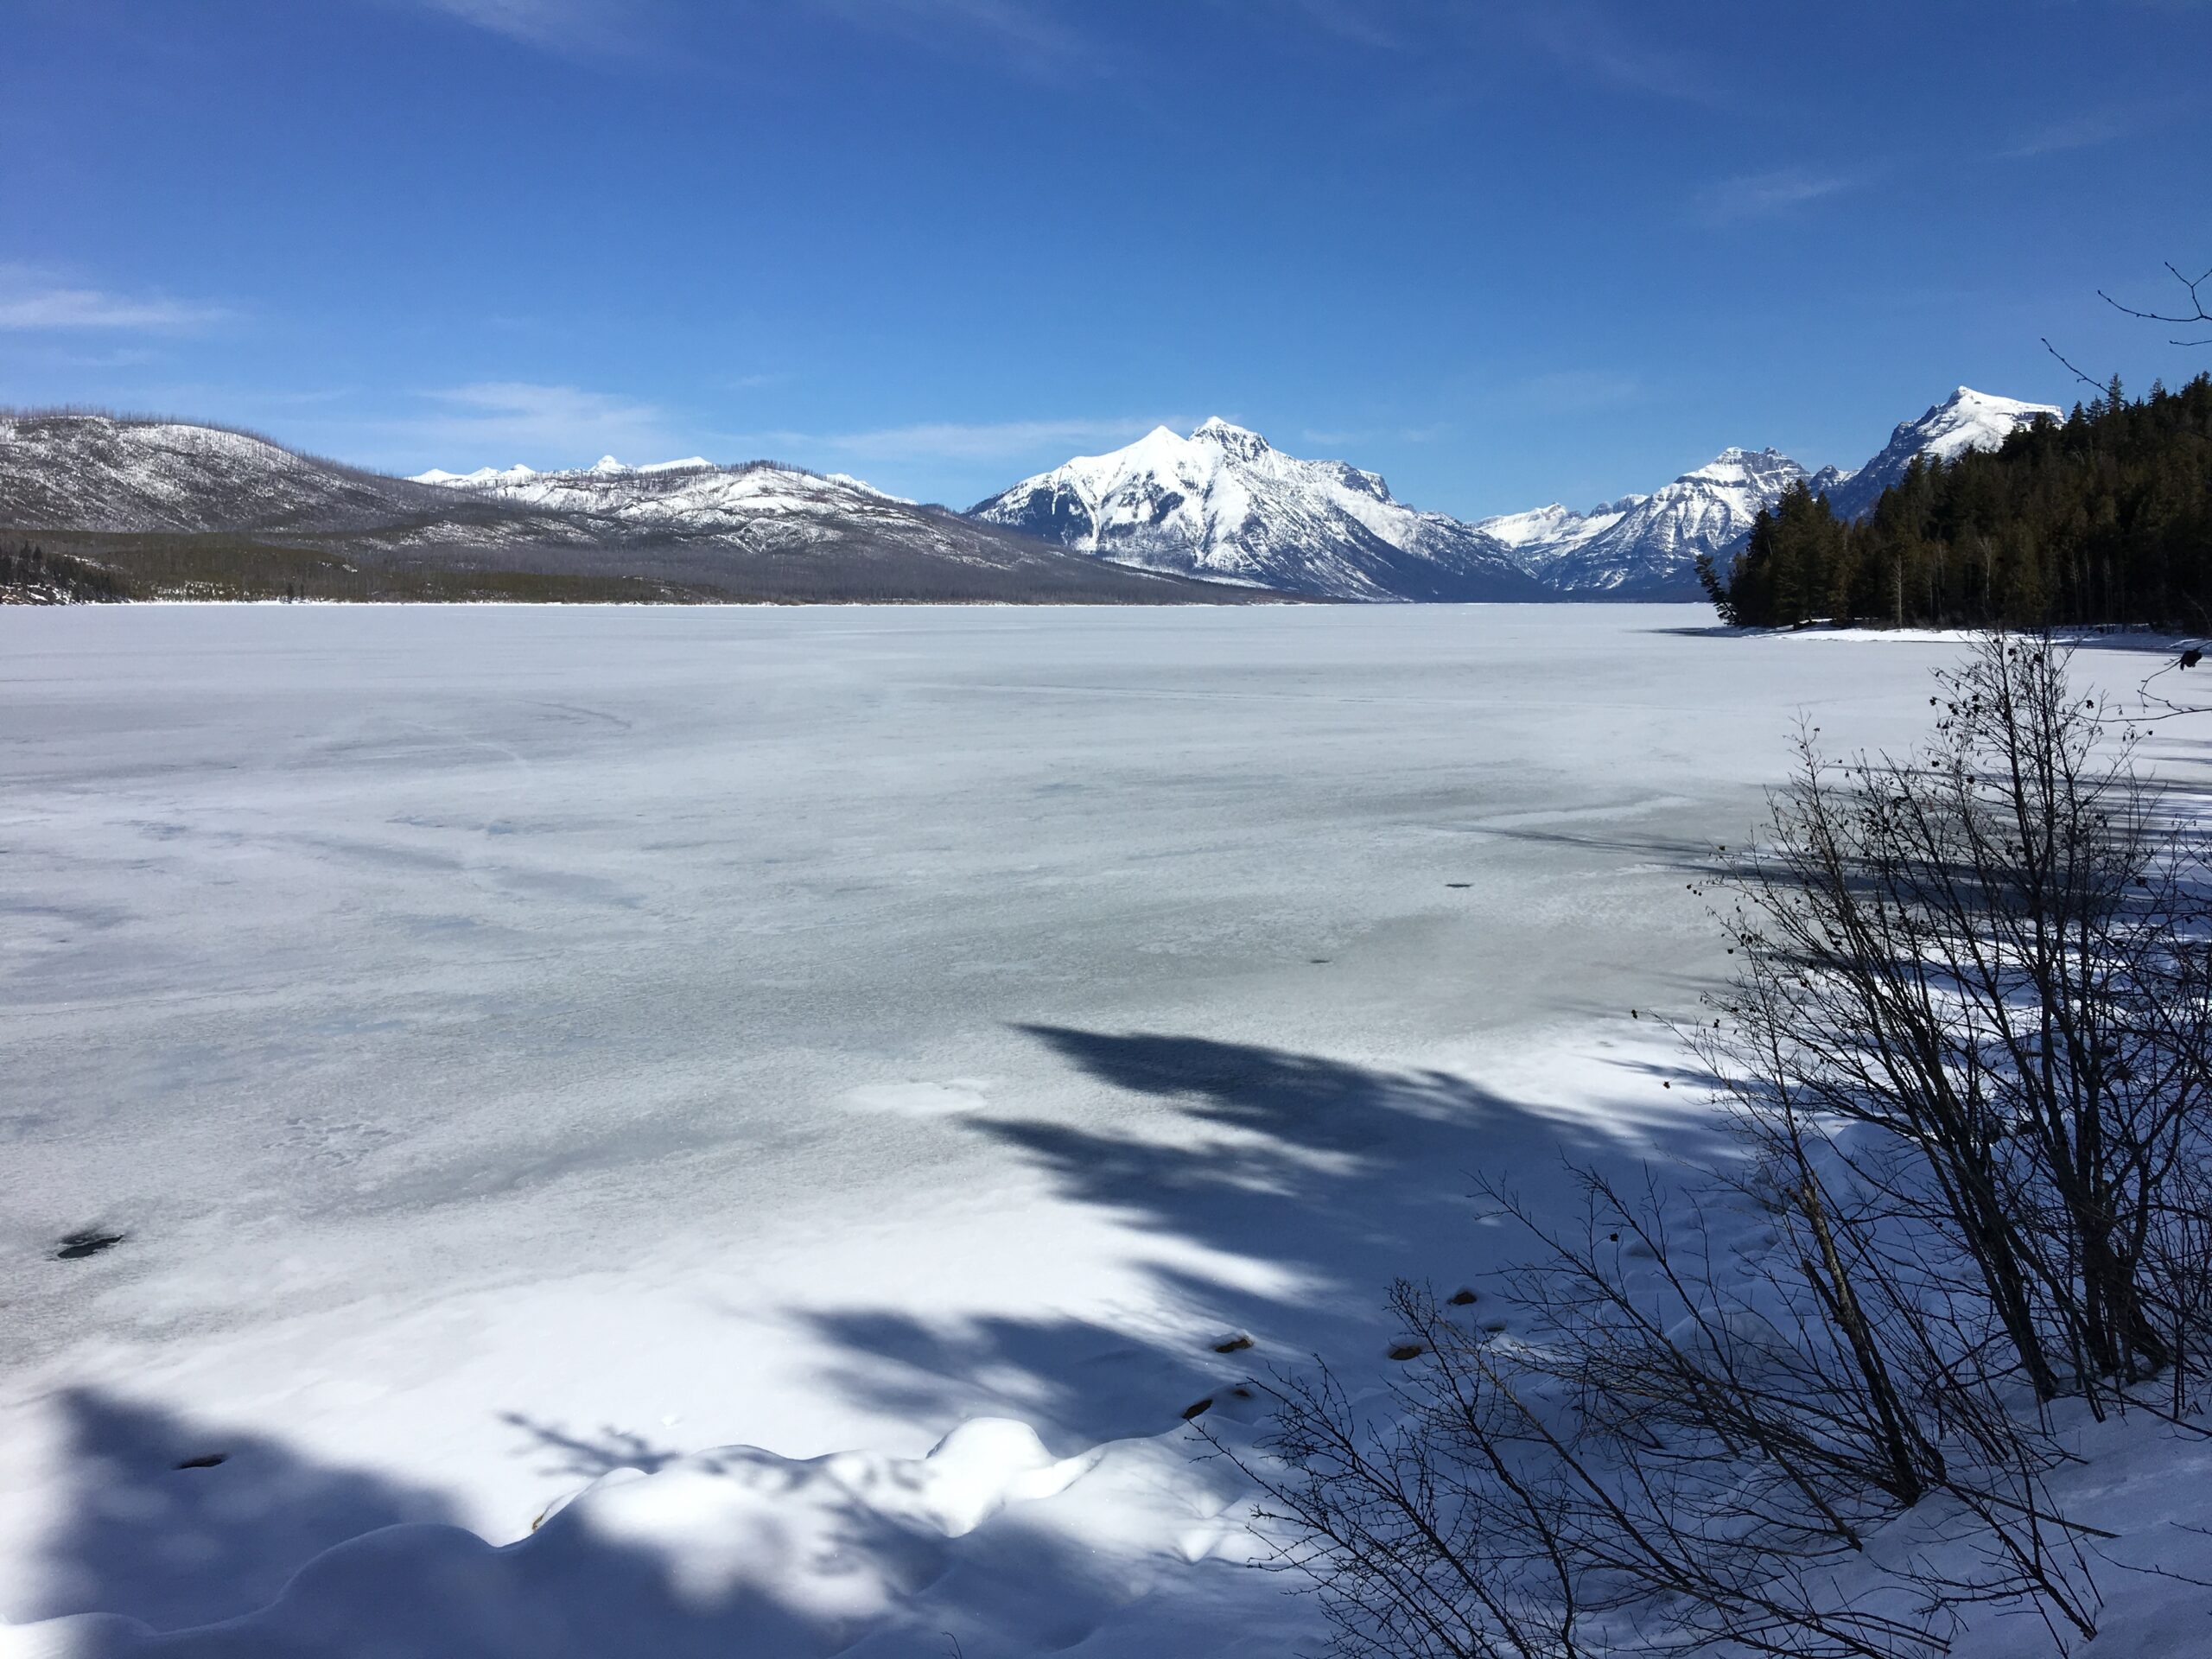 Frozen Lake McDonald